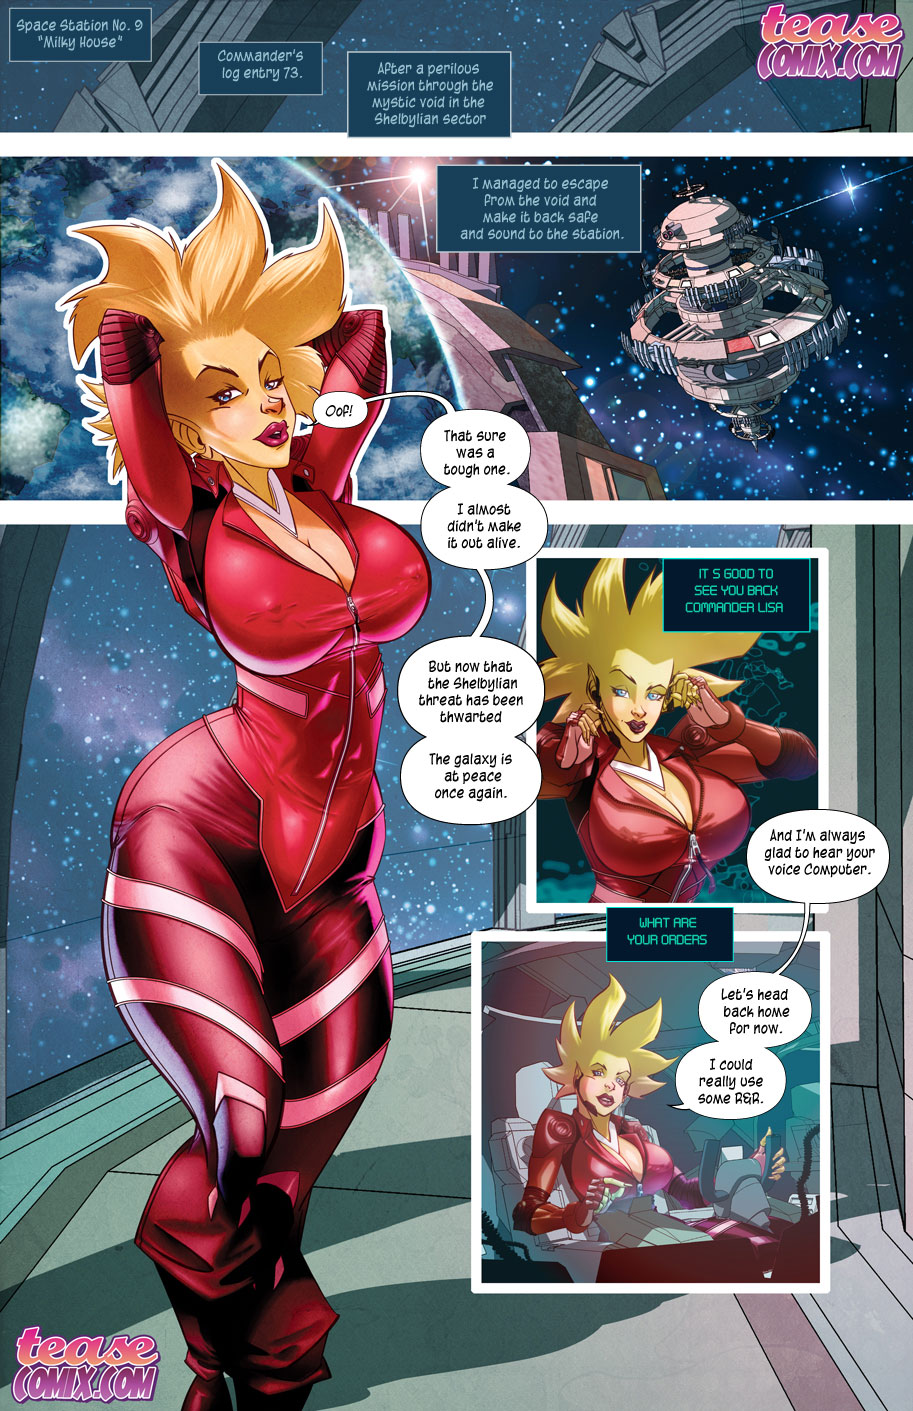 Space-Slut-page01--Gotofap.tk--47292674.jpg